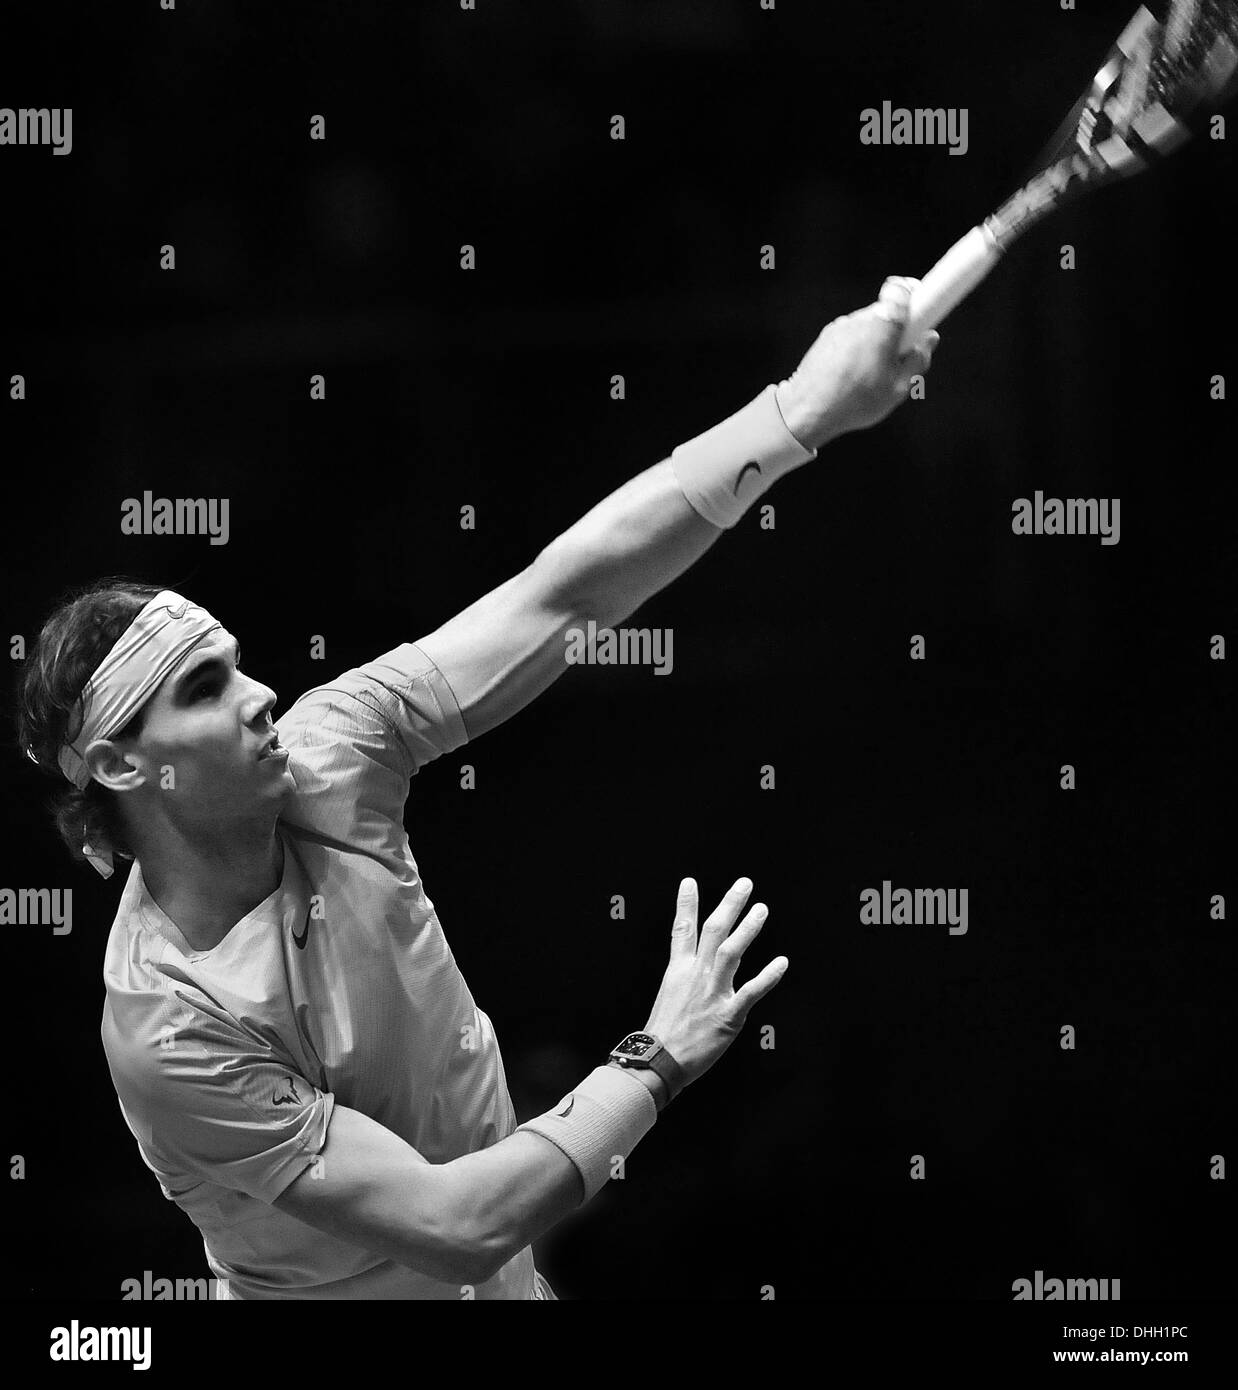 Rafael Nadal at the Barclays ATP World Tour at the 02 Arena, London. Stock Photo